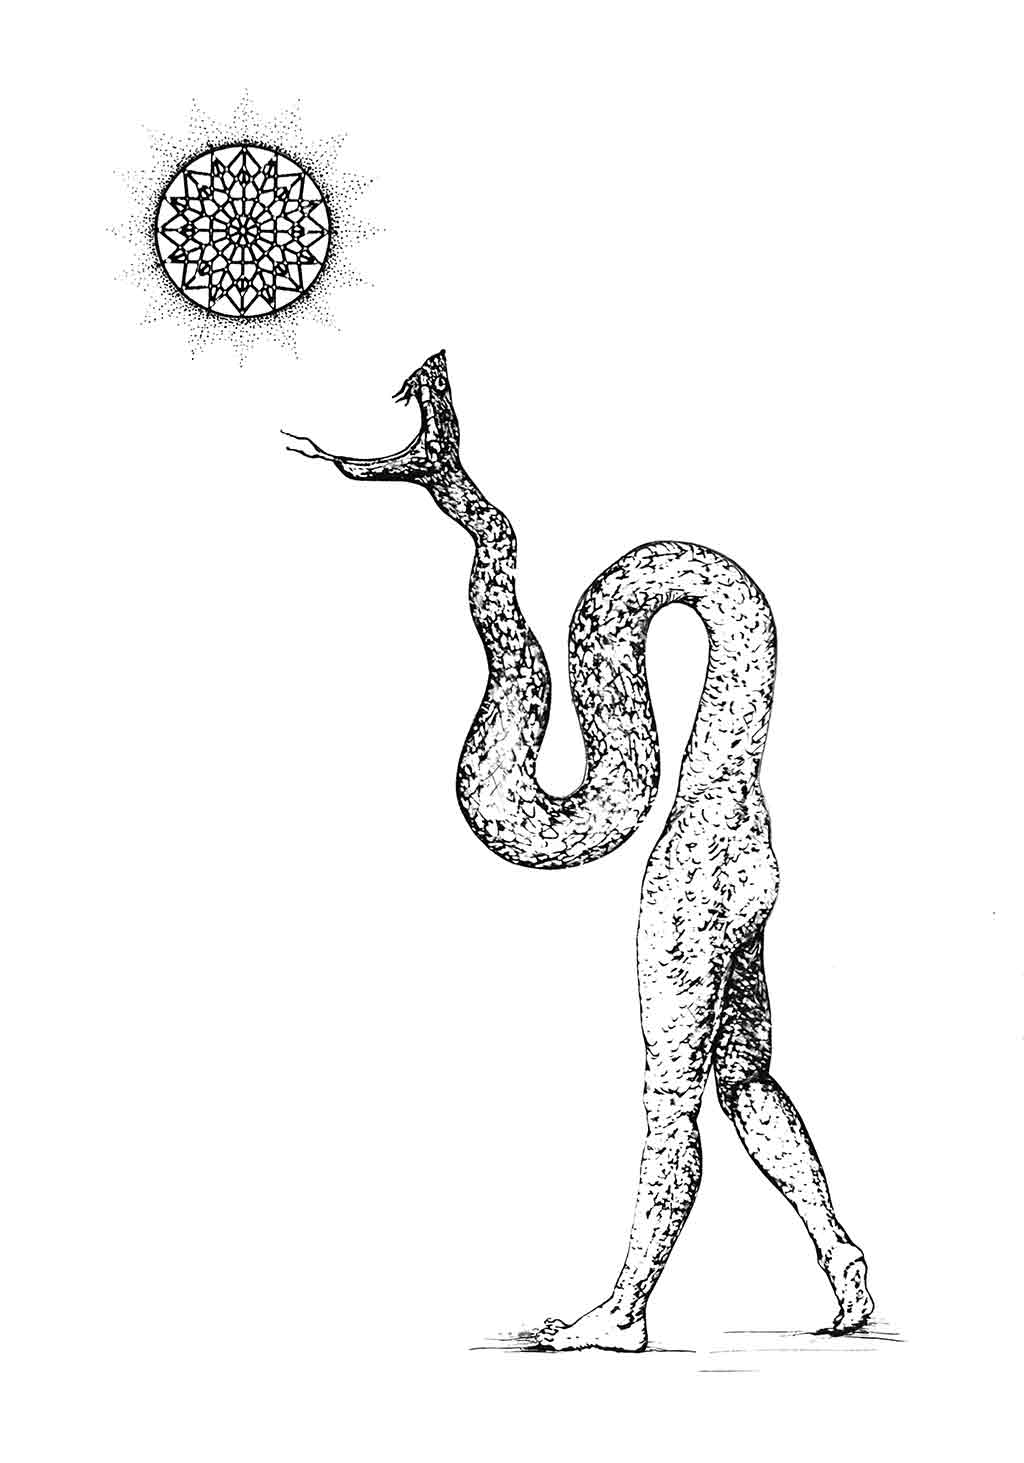 Man‘s body forward, above hips turns into powerful snake, opening snout towards sun-tantra above; Wiesław Sadurski